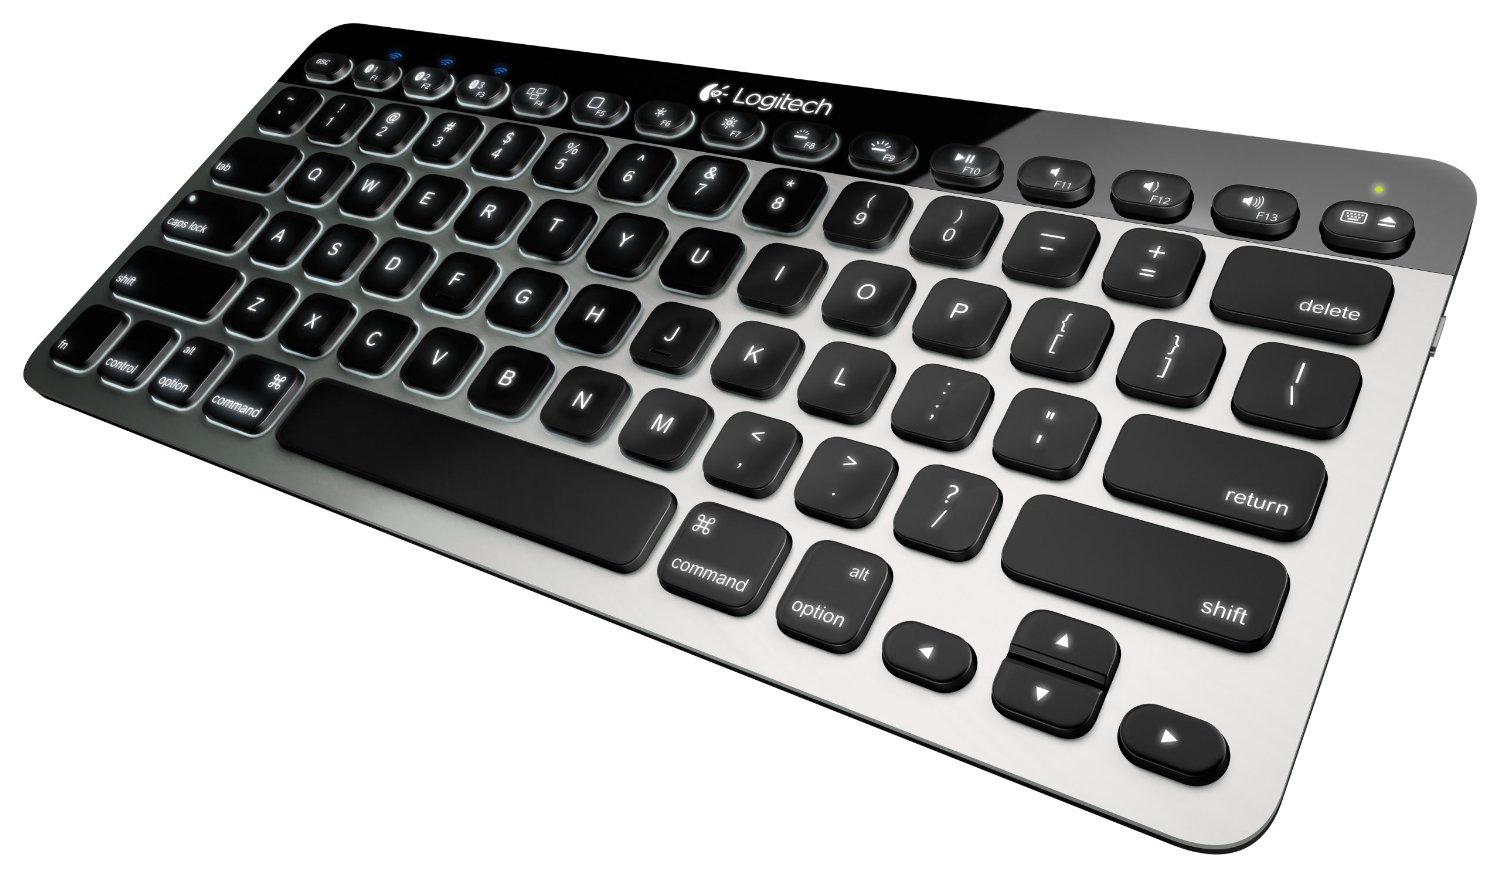 Logitech Bluetooth Easy-Switch K811 Keyboard for Mac, iPad, iPhone - Silver:Black